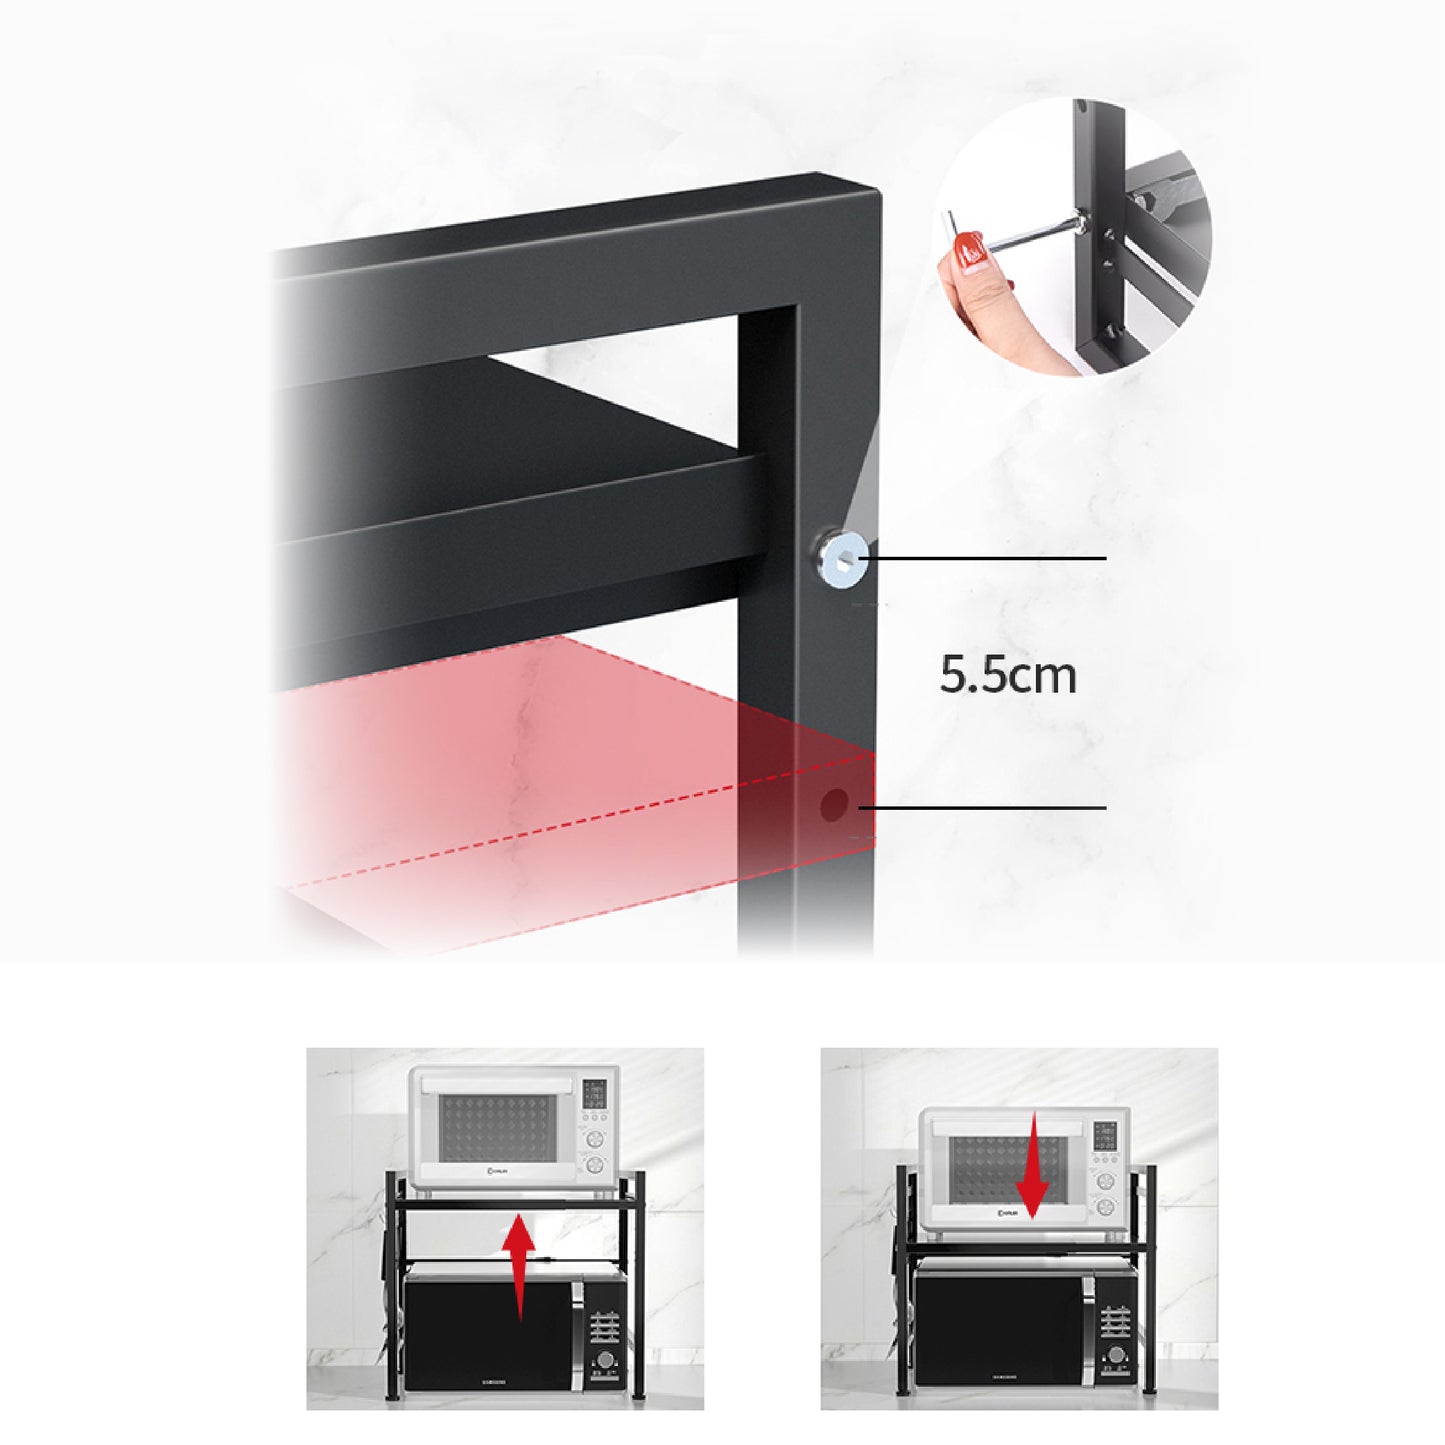 Mcoco Microwave Rack Single & Double Shelves Black Colour  - MW0